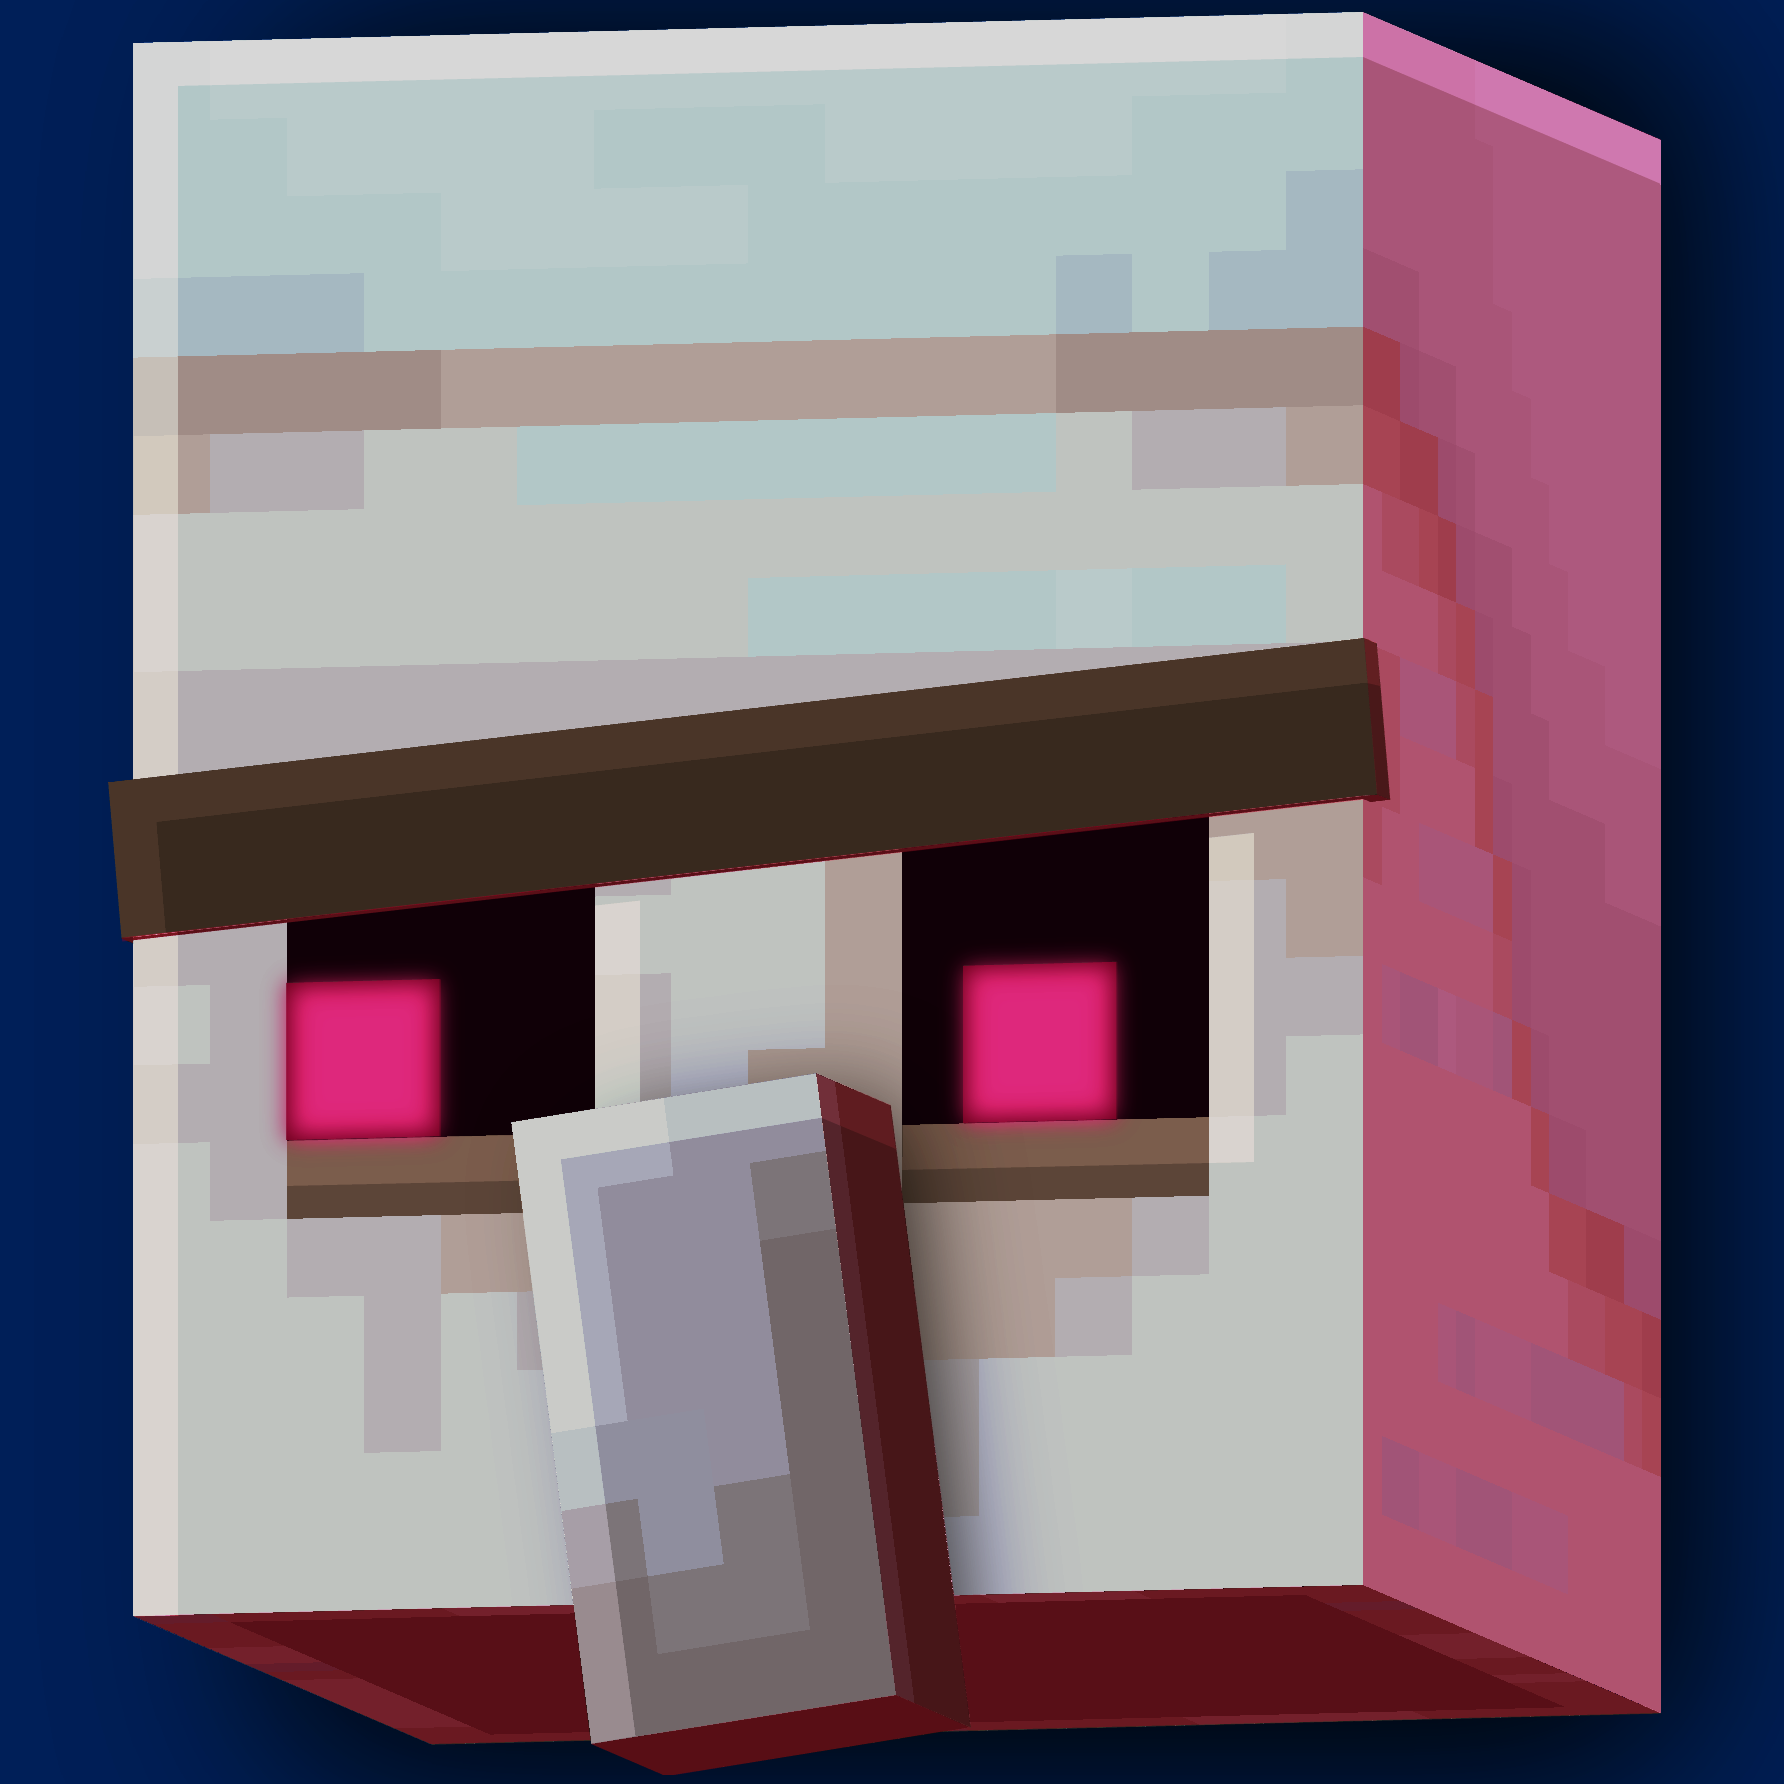 minecraft sheep head pixel art